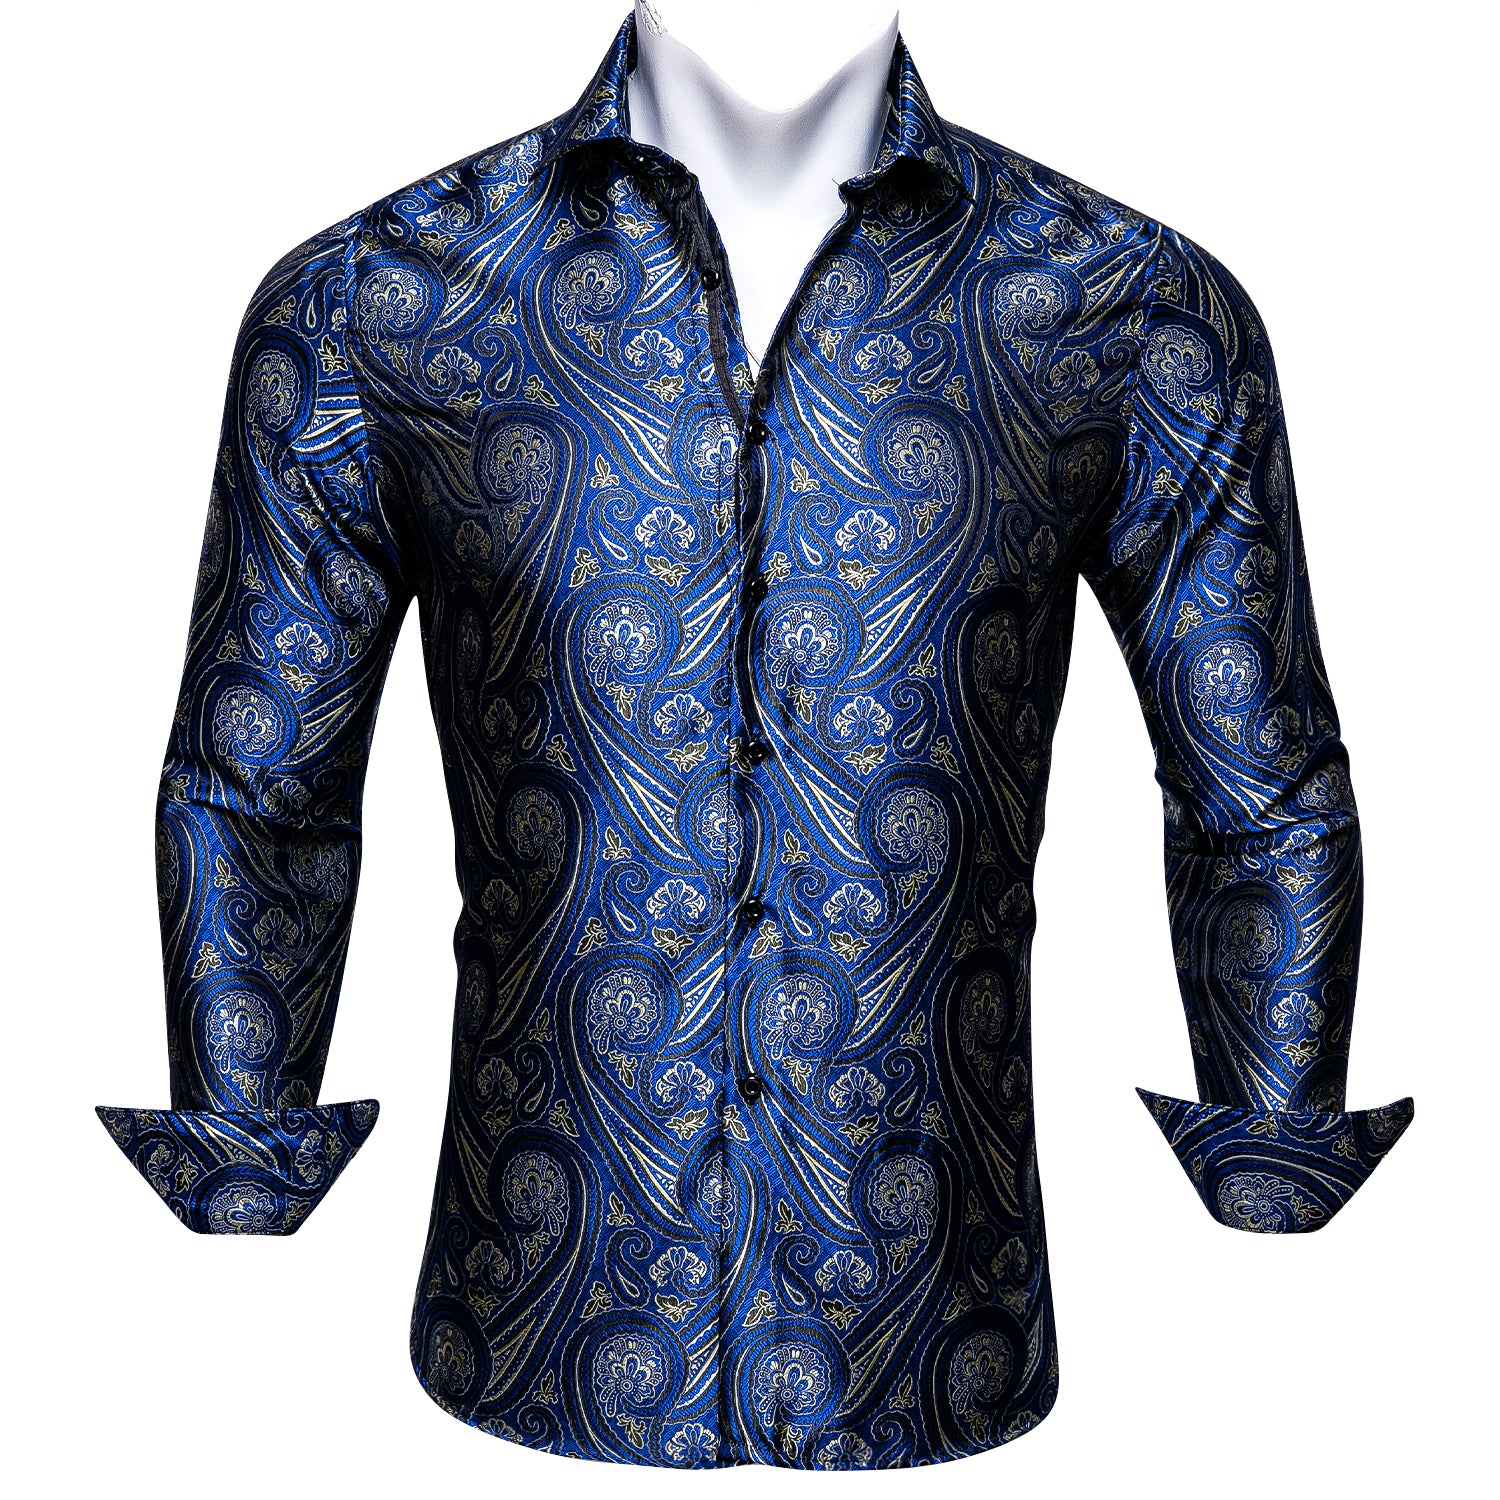 Barry.wang New Plus Size Blue Silk Paisley Tribal Long Sleeve Men's Shirt